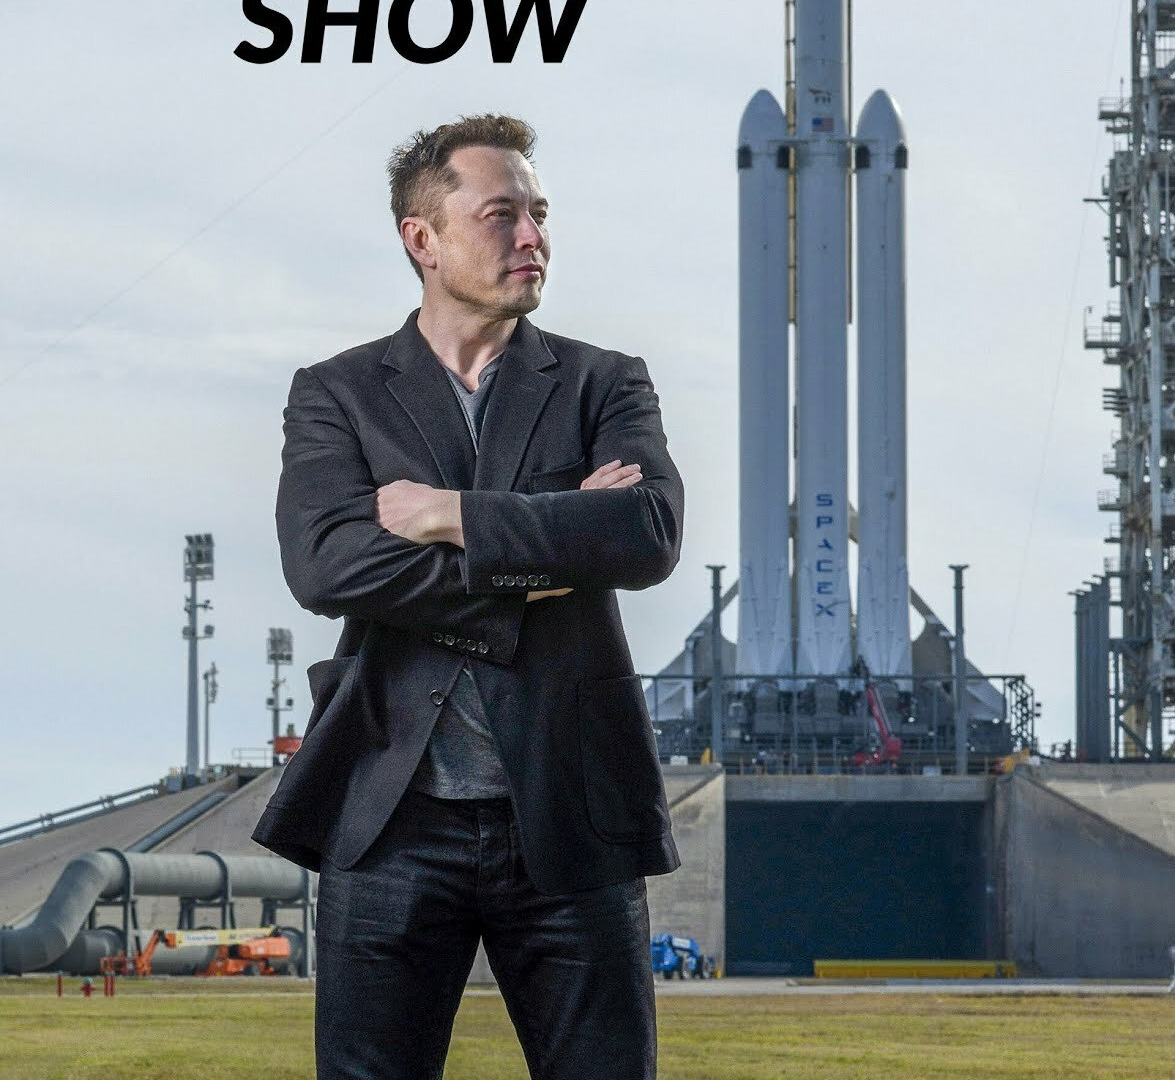 Show The Elon Musk Show